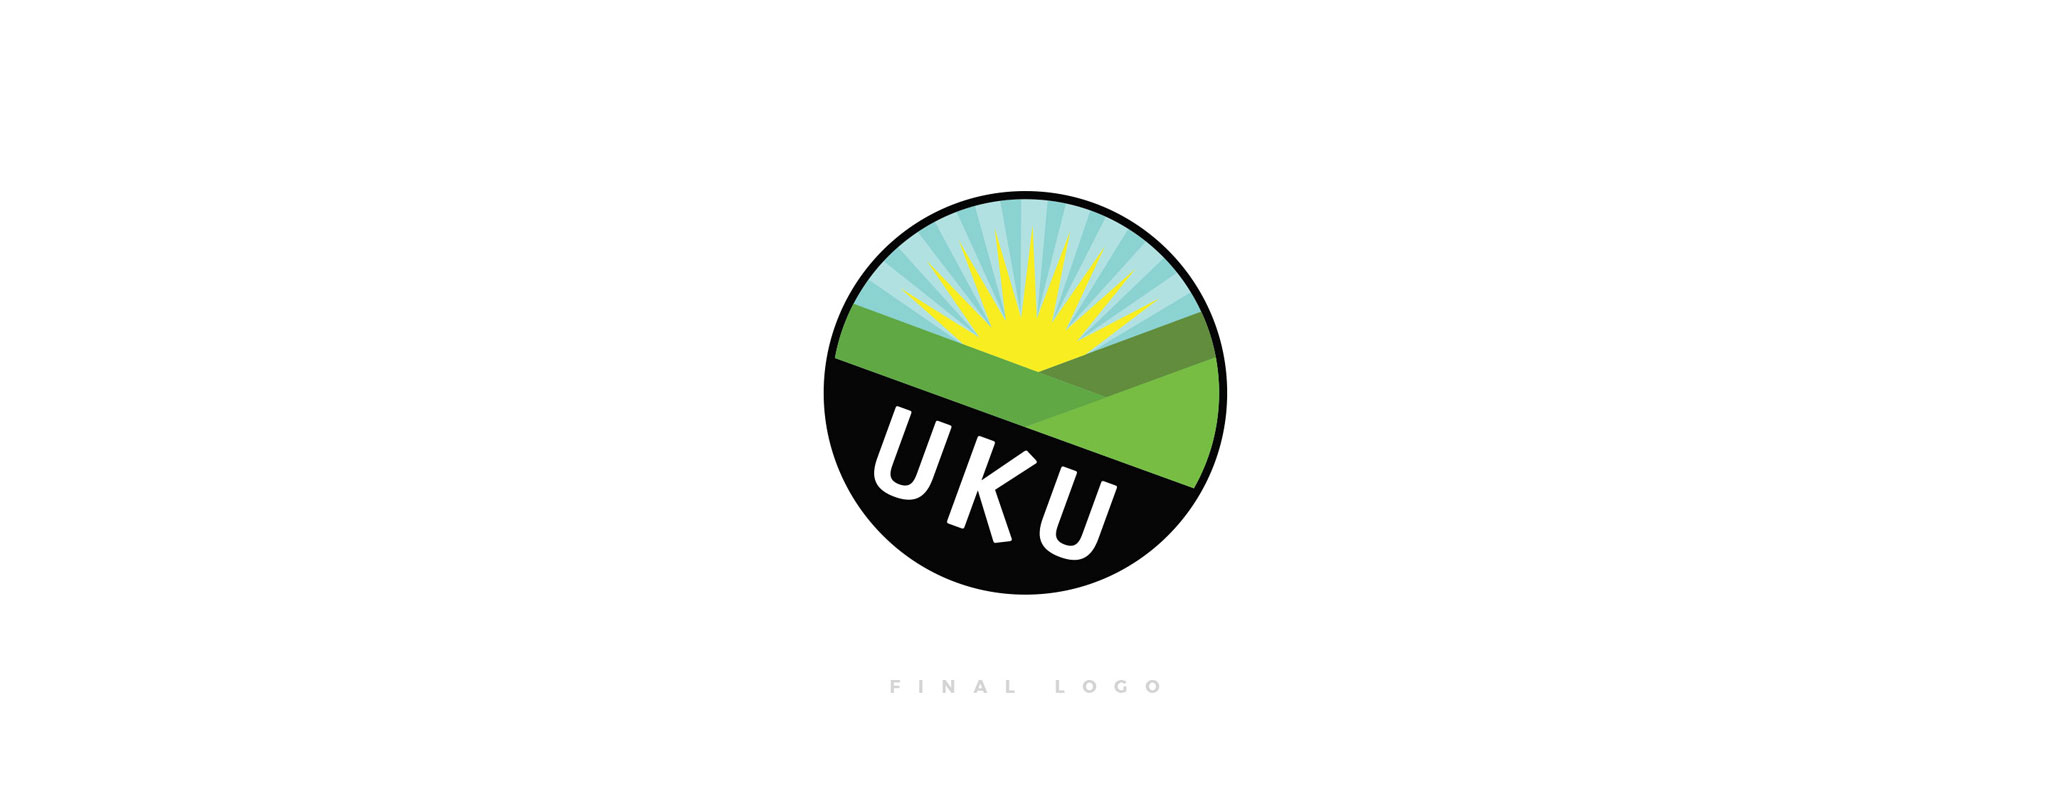 uku cannabis logo design